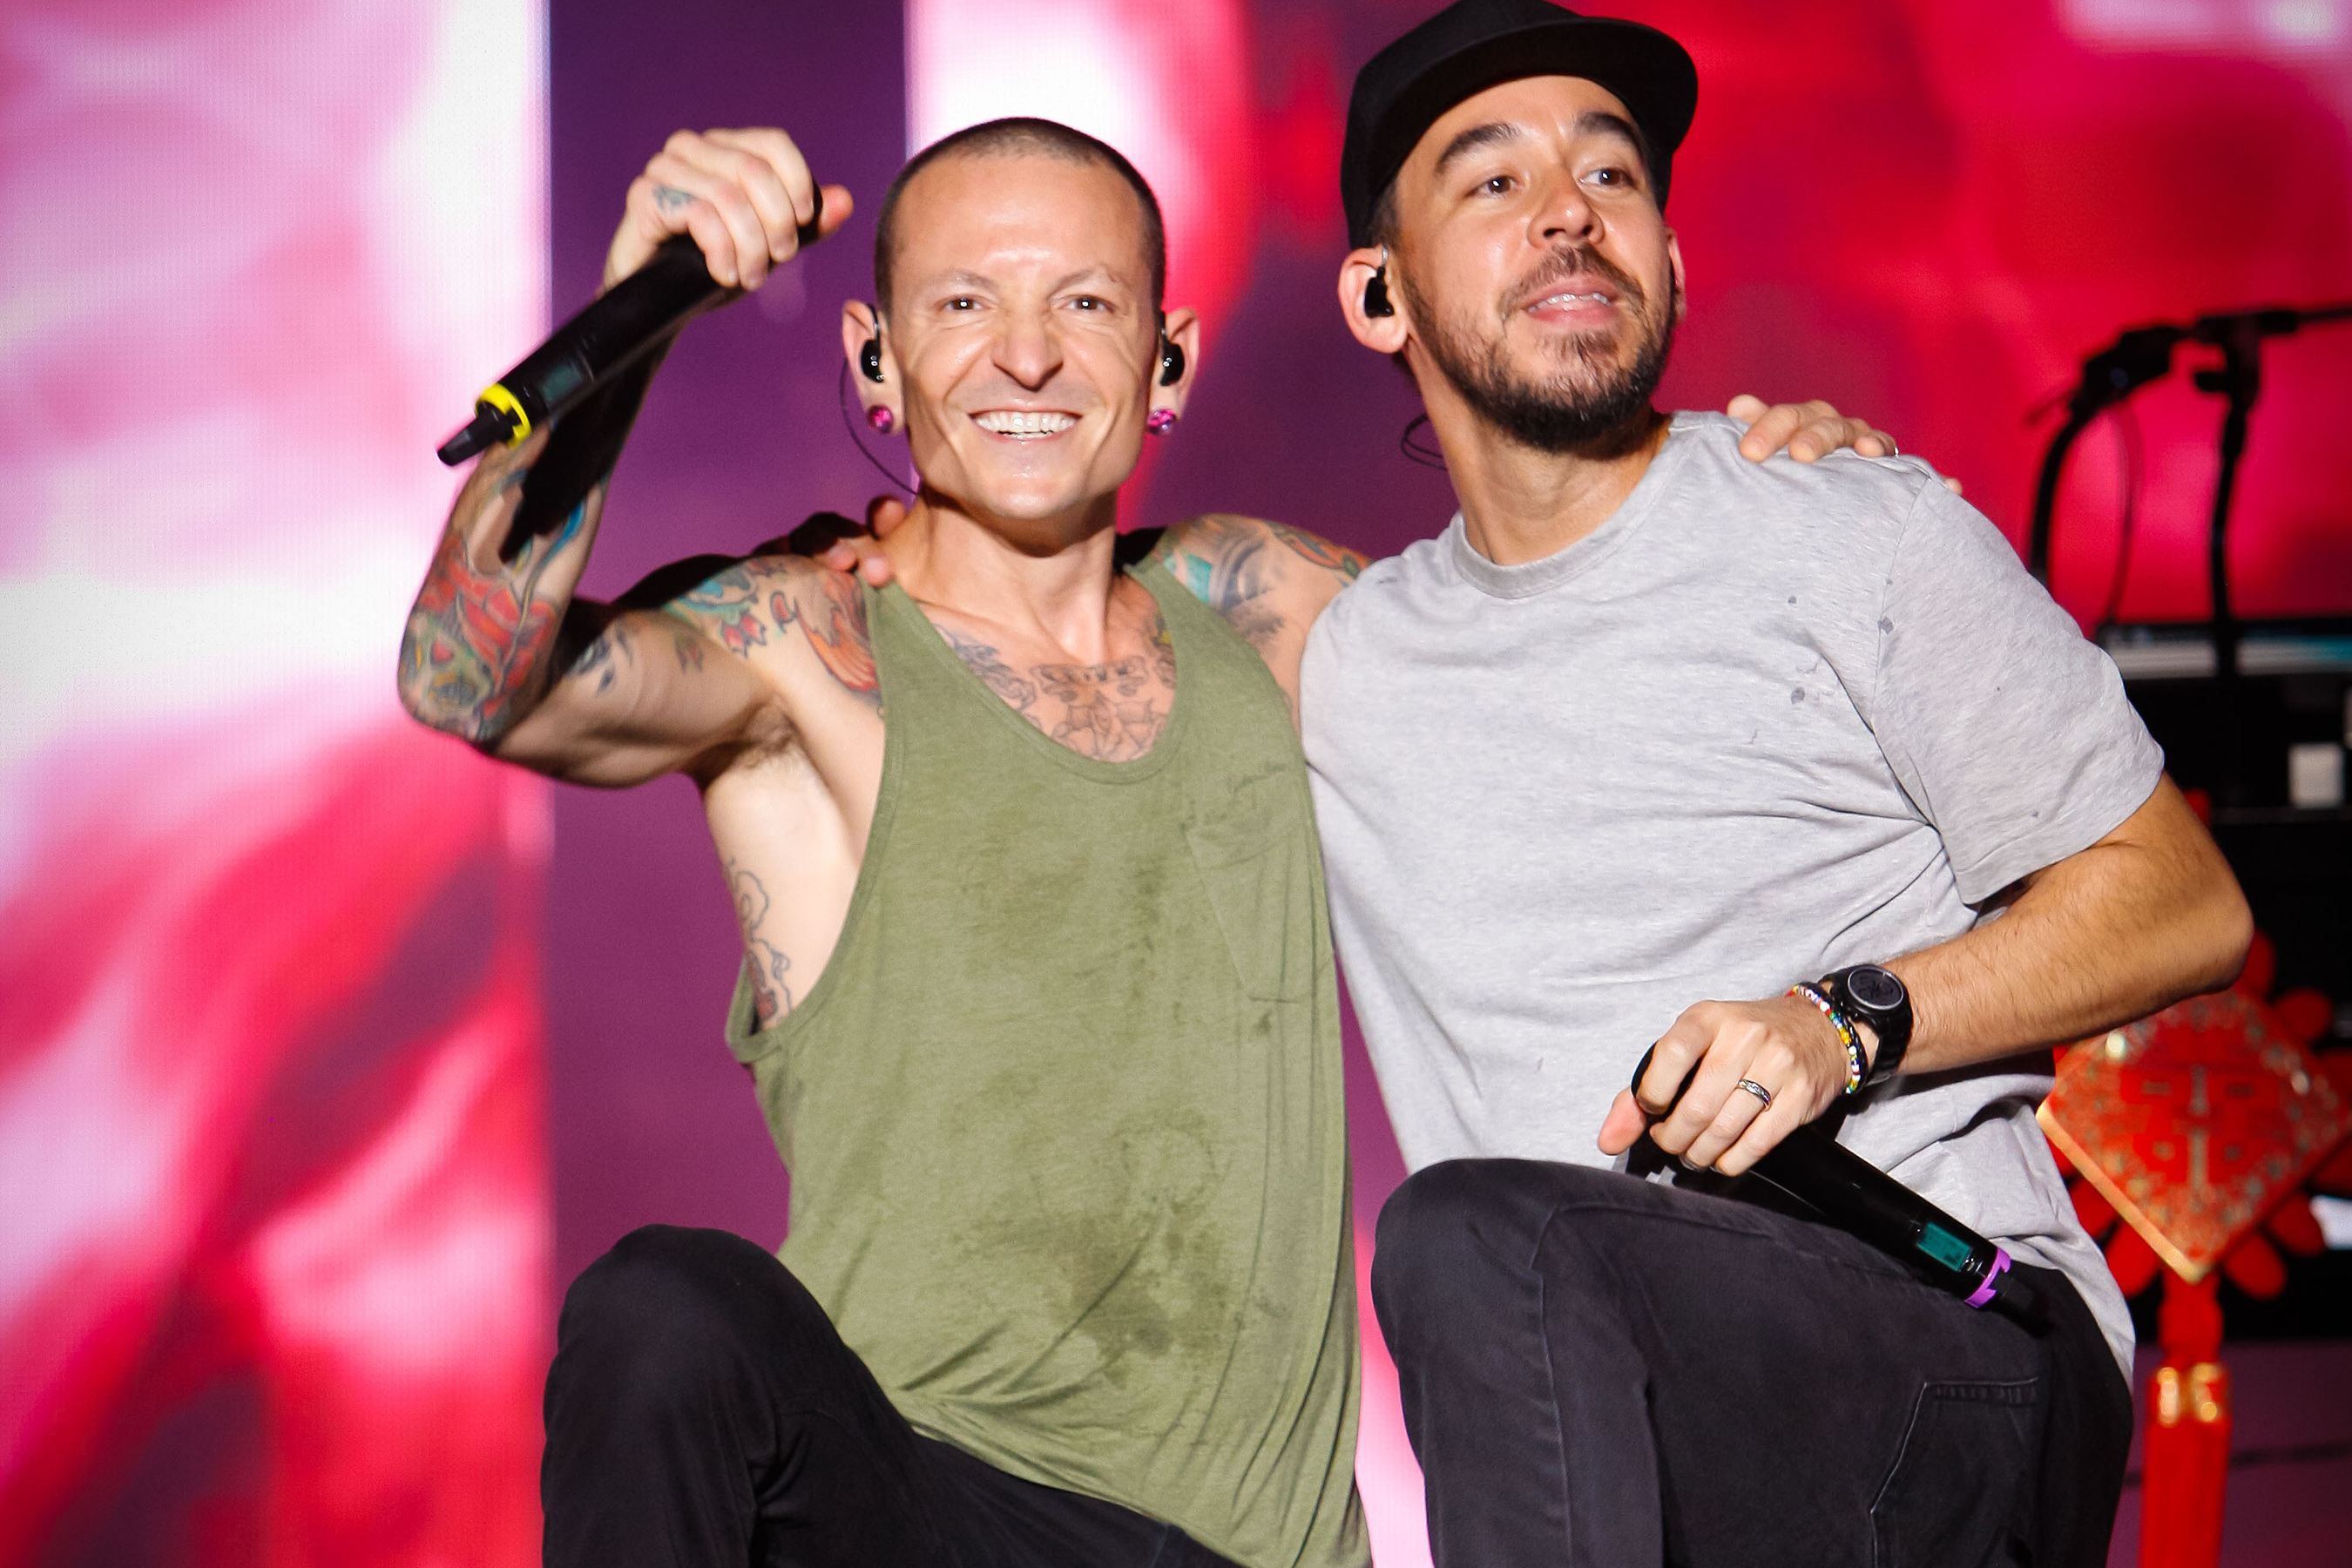 En este momento estás viendo Integrante de Linkin Park lanza canciones en recuerdo de Chester Bennington